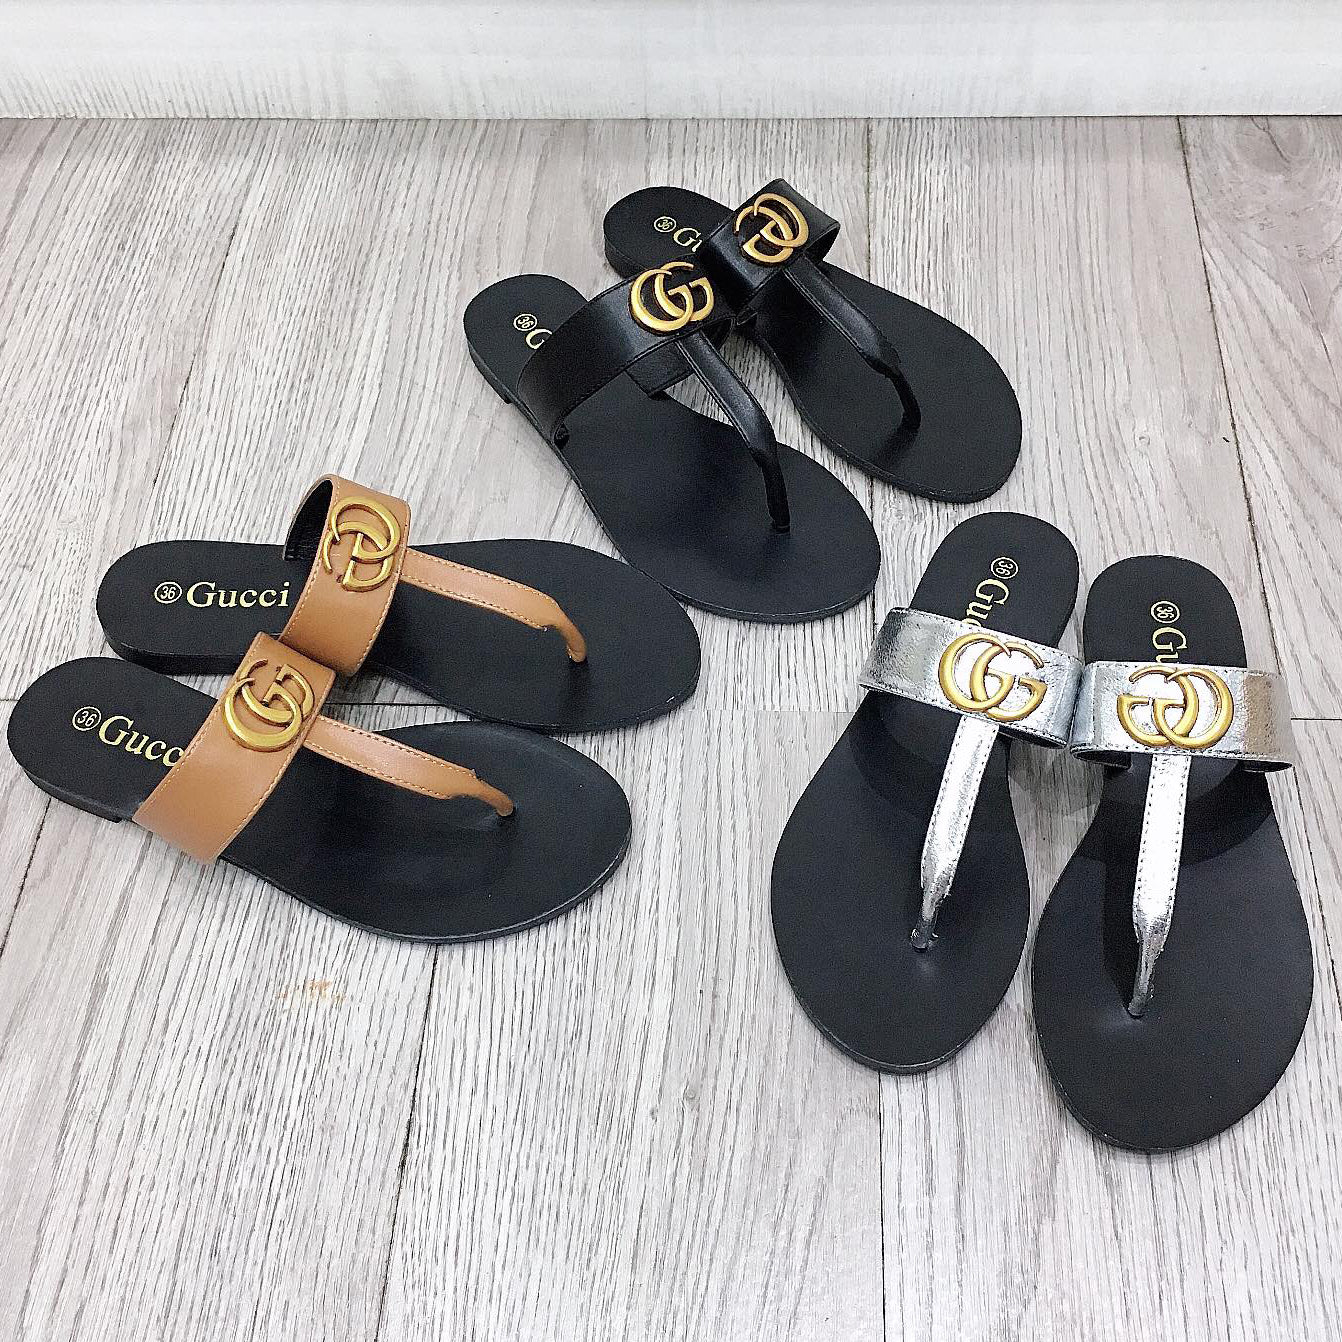 GG gold letter logo ladies flip flop sandals beach slippers Shoe